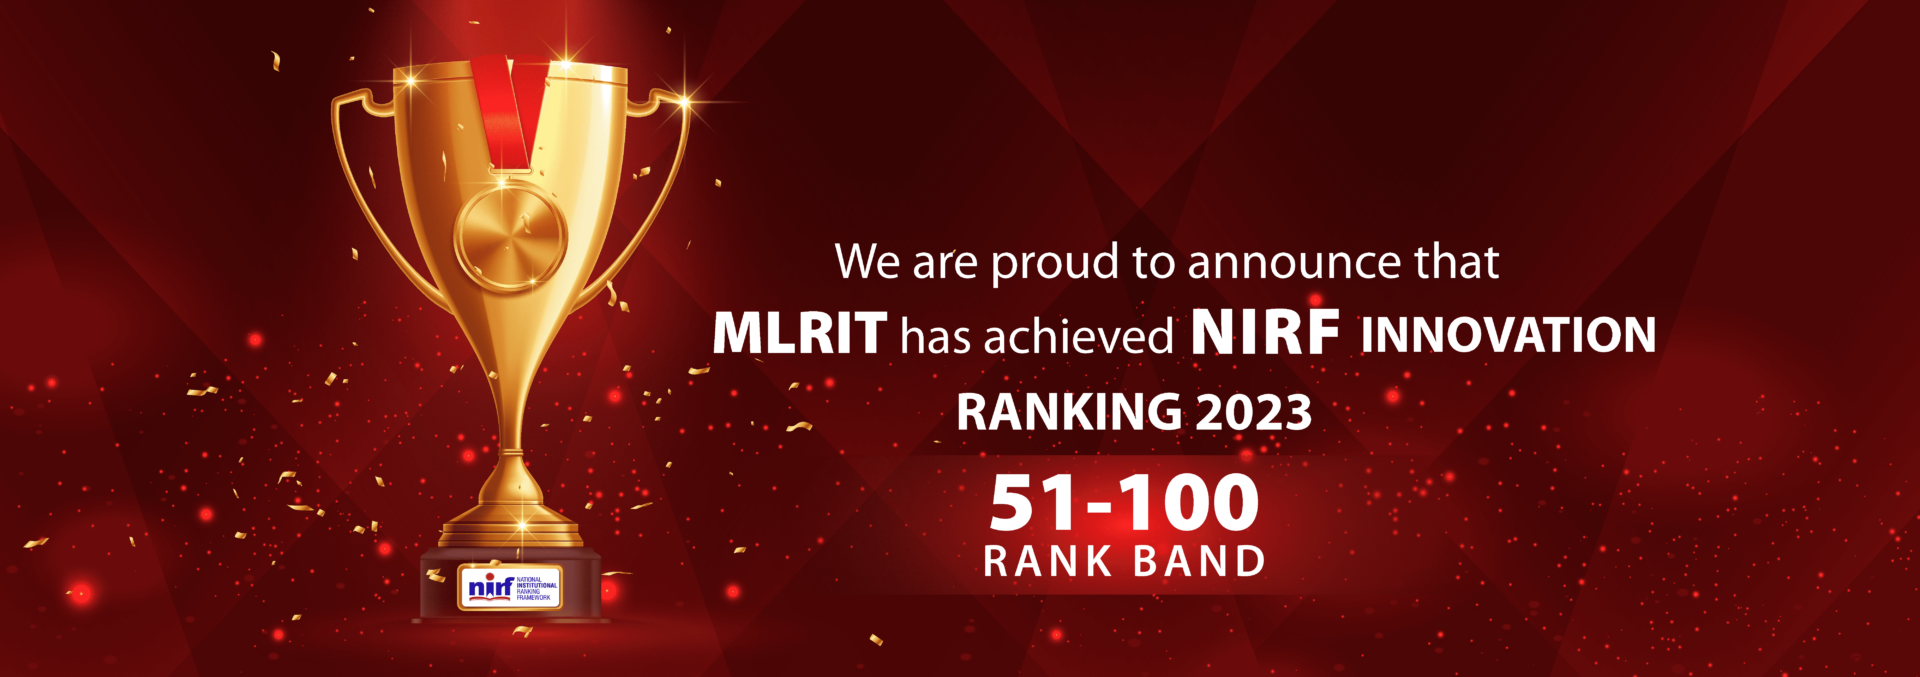 NIRF Innovation Ranking 2023